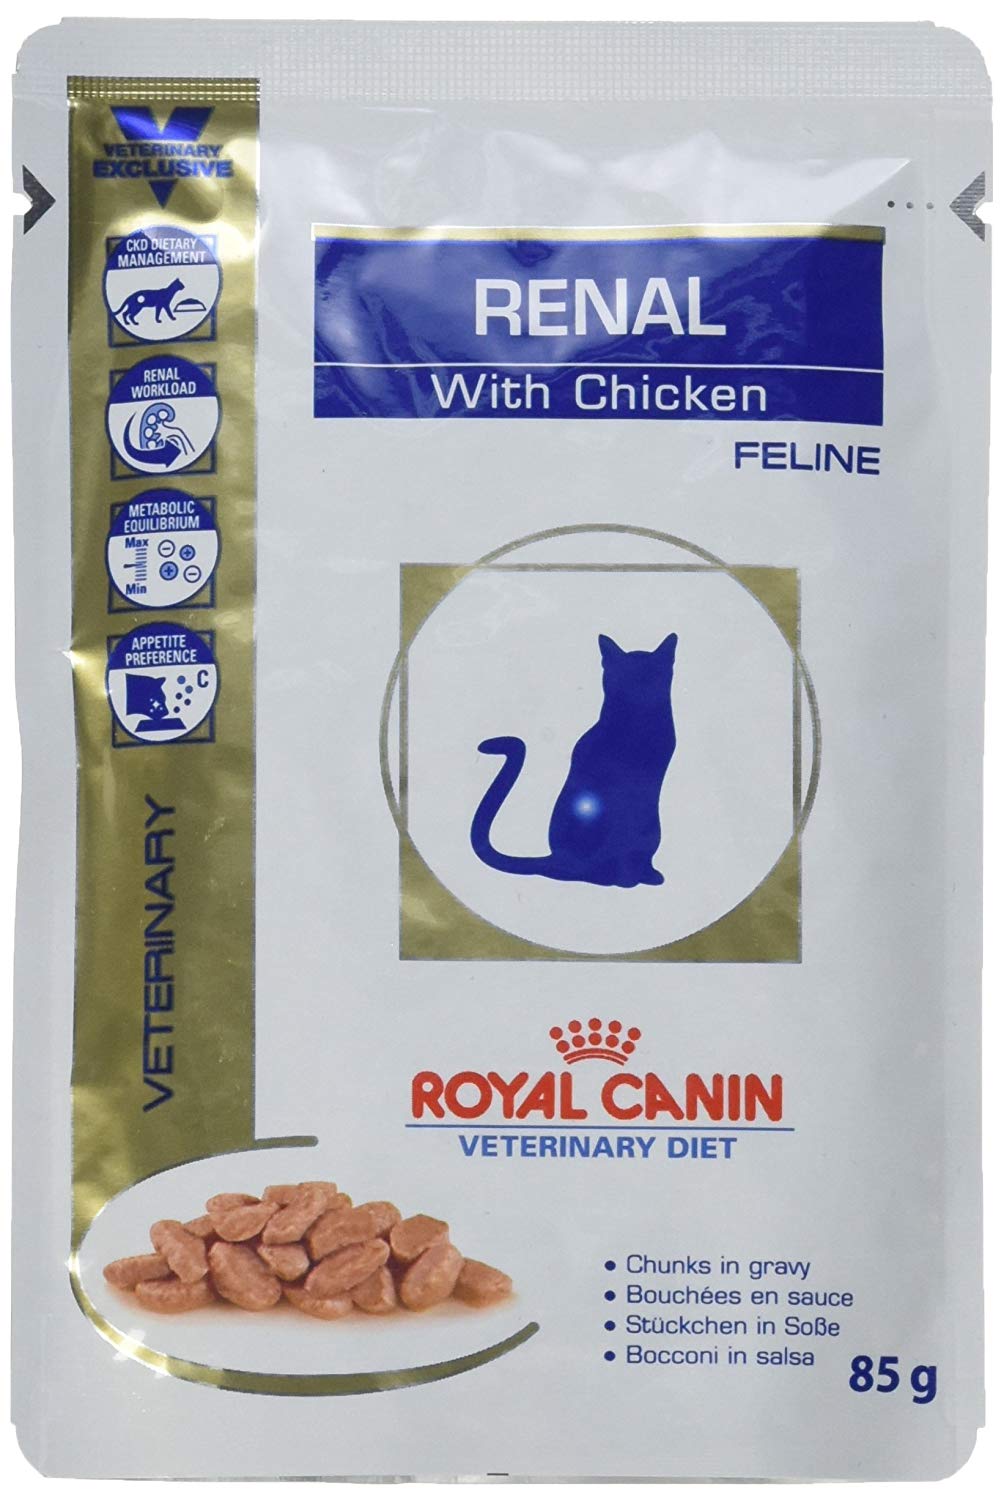 Royal canin renal для кошек купить. Royal Canin renal для кошек. Royal Canin renal with Chicken для кошек. Royal Canin renal Feline Chicken. Ренал Advanced для кошек.